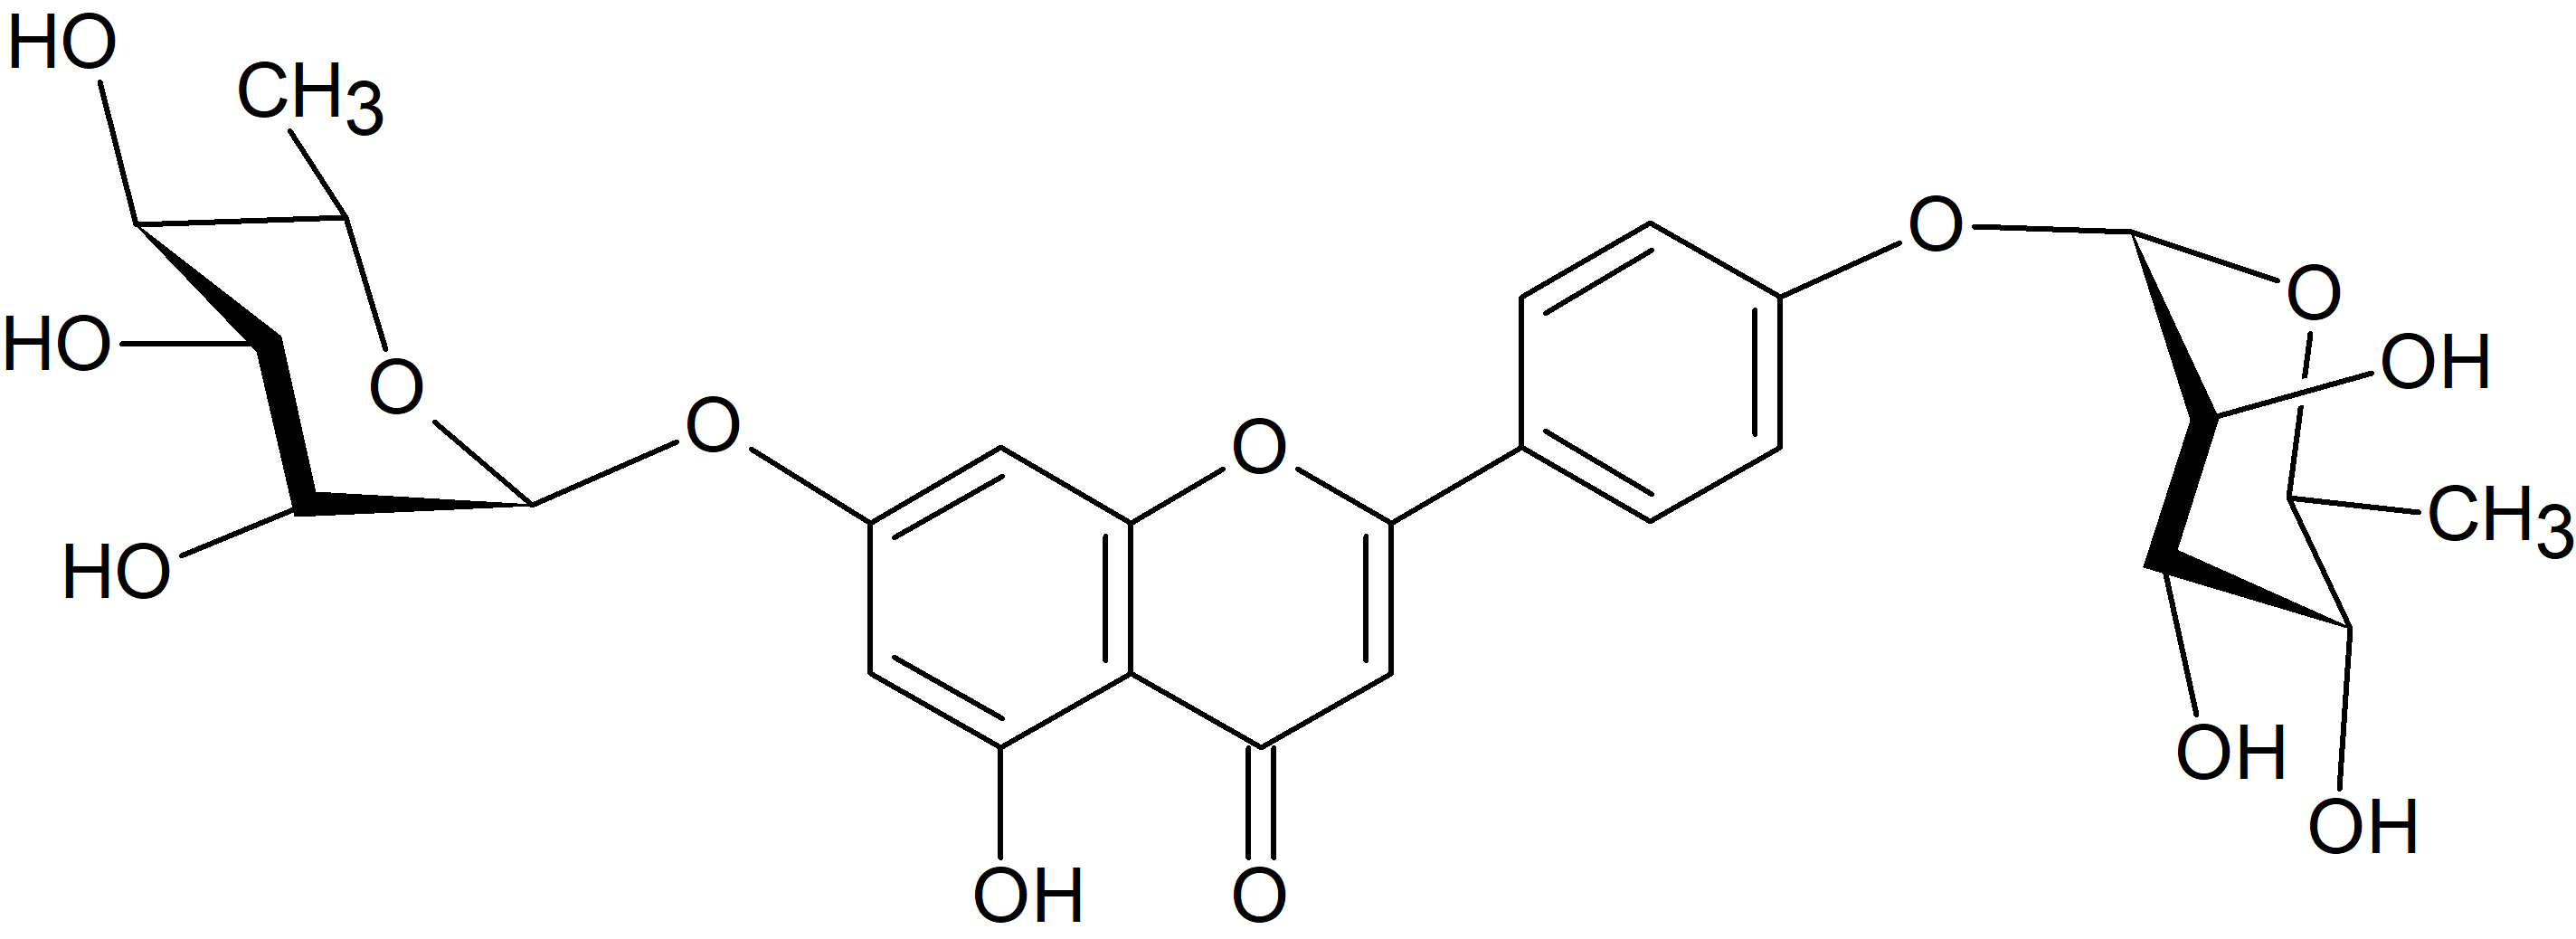 Apigenin 7,4'-O-dirhamnoside